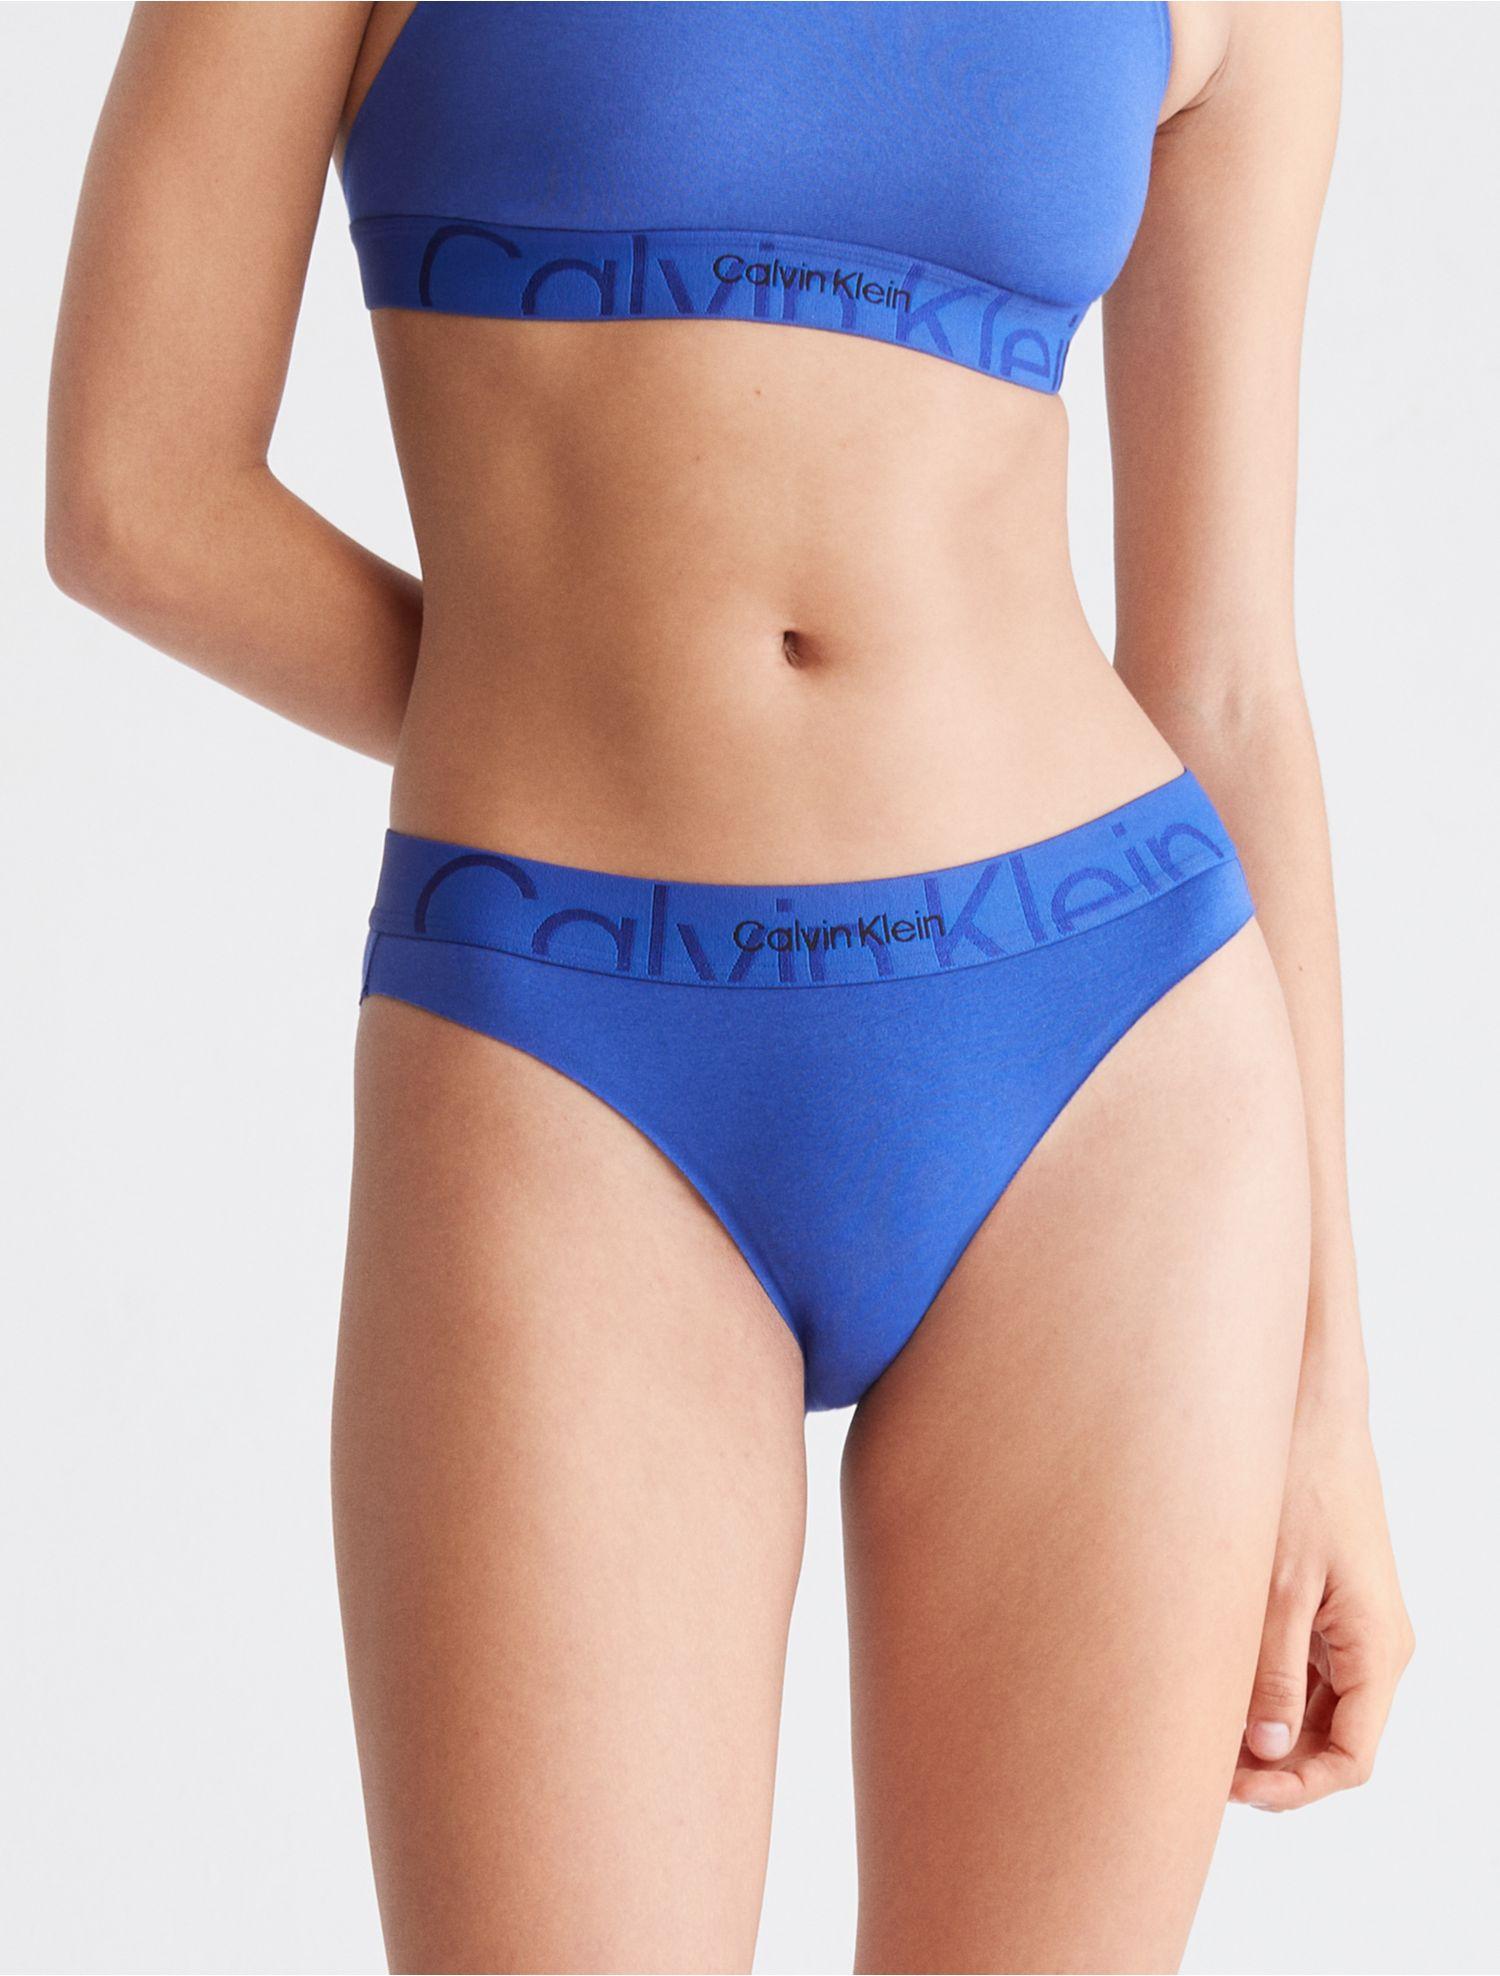 Calvin Klein Embossed Icon Bikini in Blue